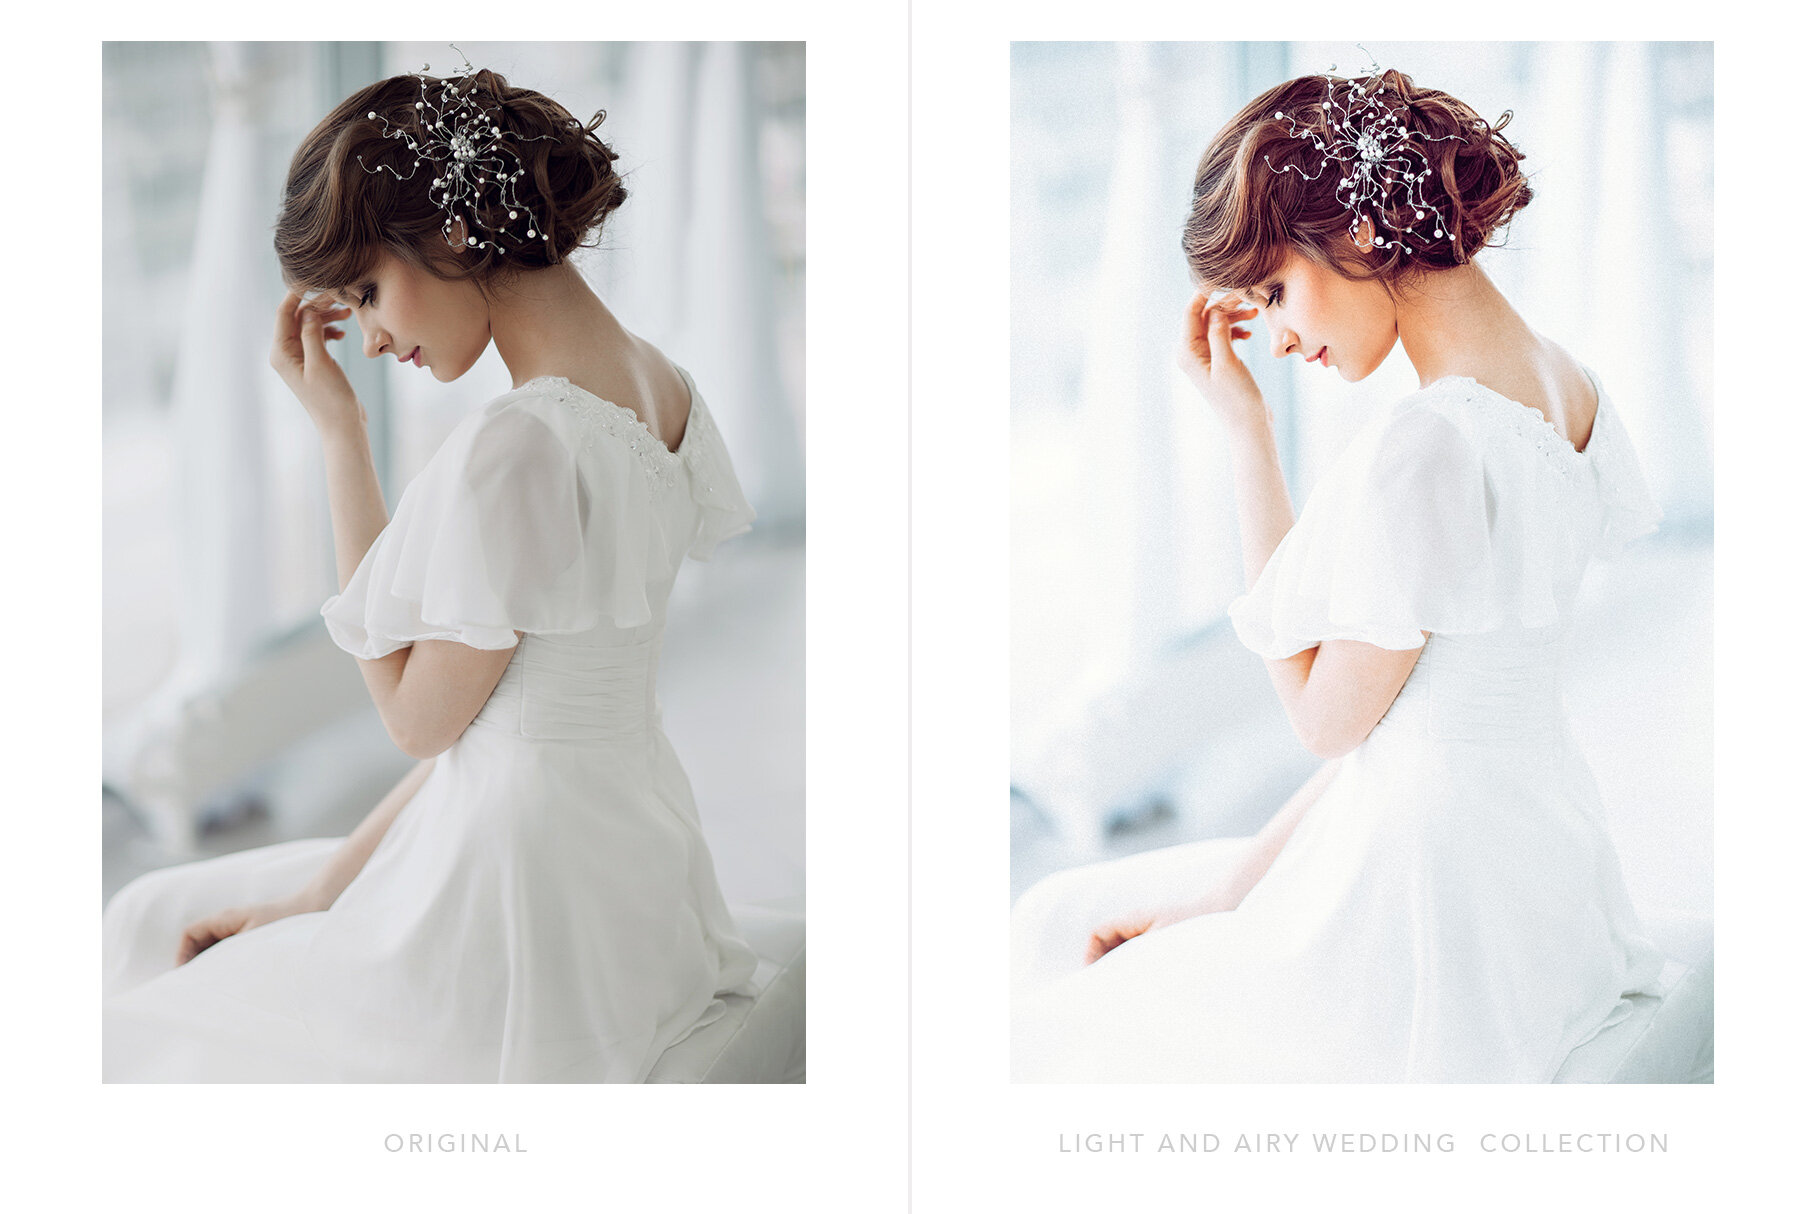 Light-and-Airy-Wedding-lightroom-presets-10.jpg